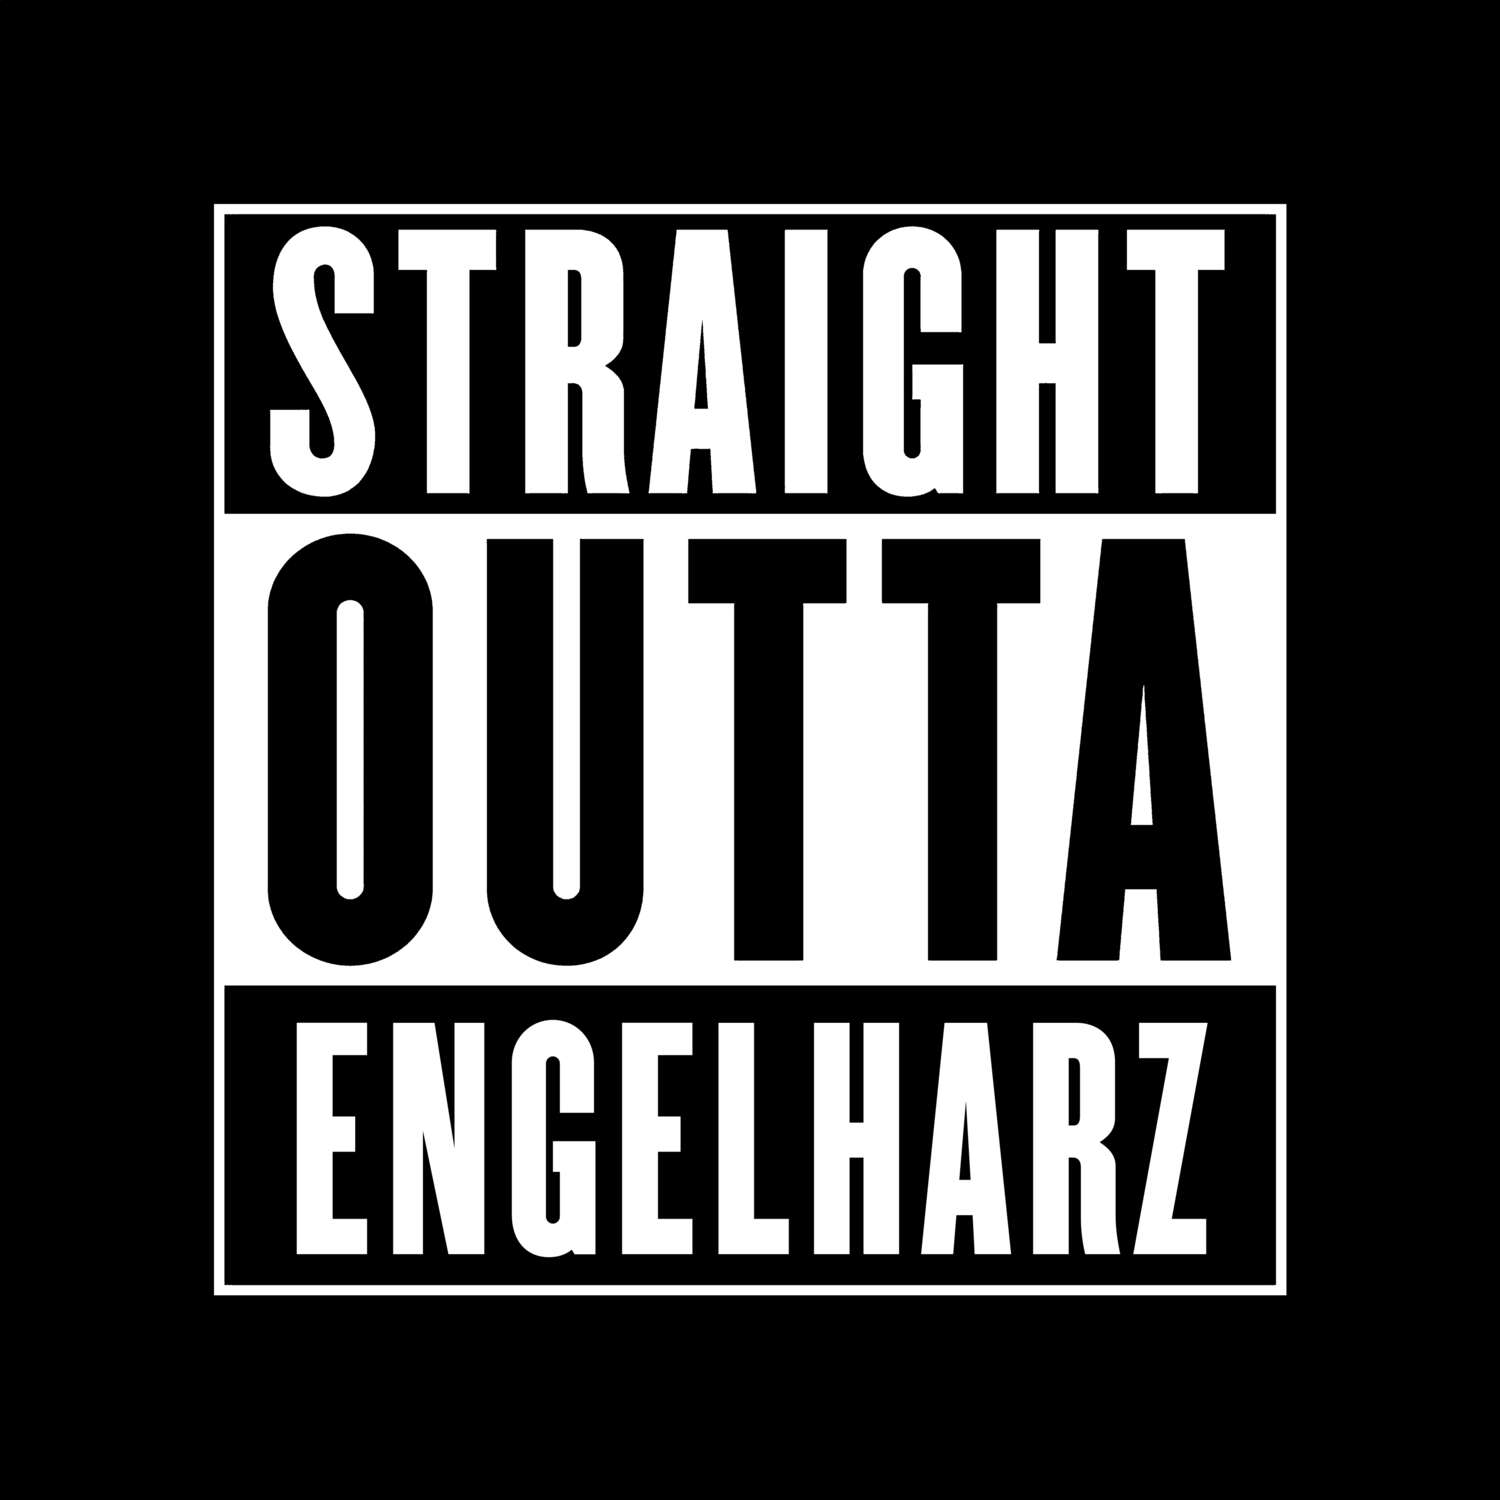 Engelharz T-Shirt »Straight Outta«